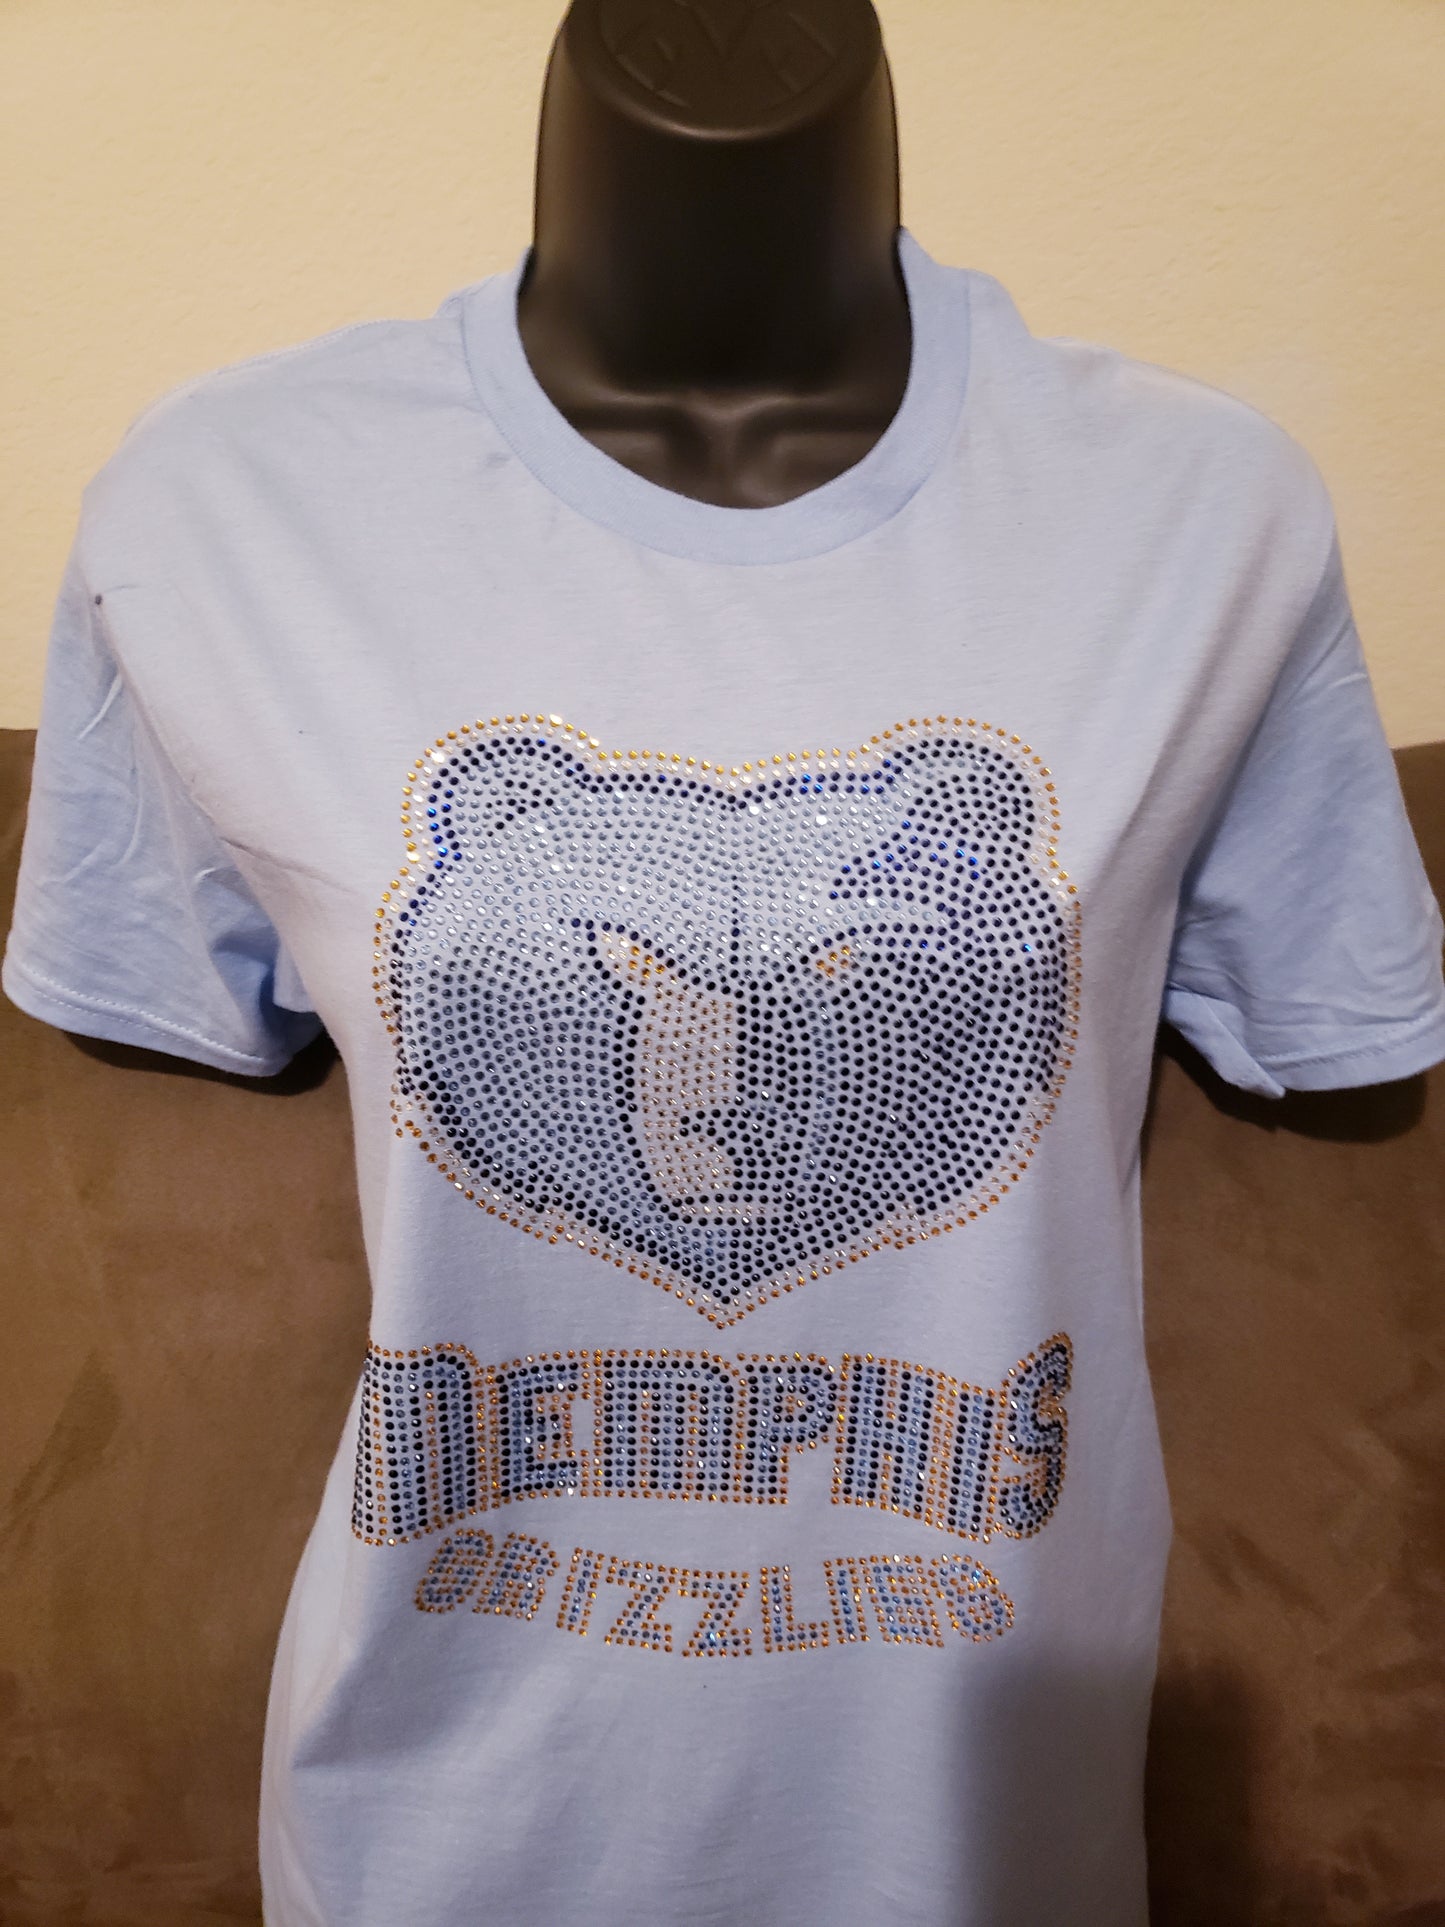 Memphis Grizzlies Rhinestone Bling Design